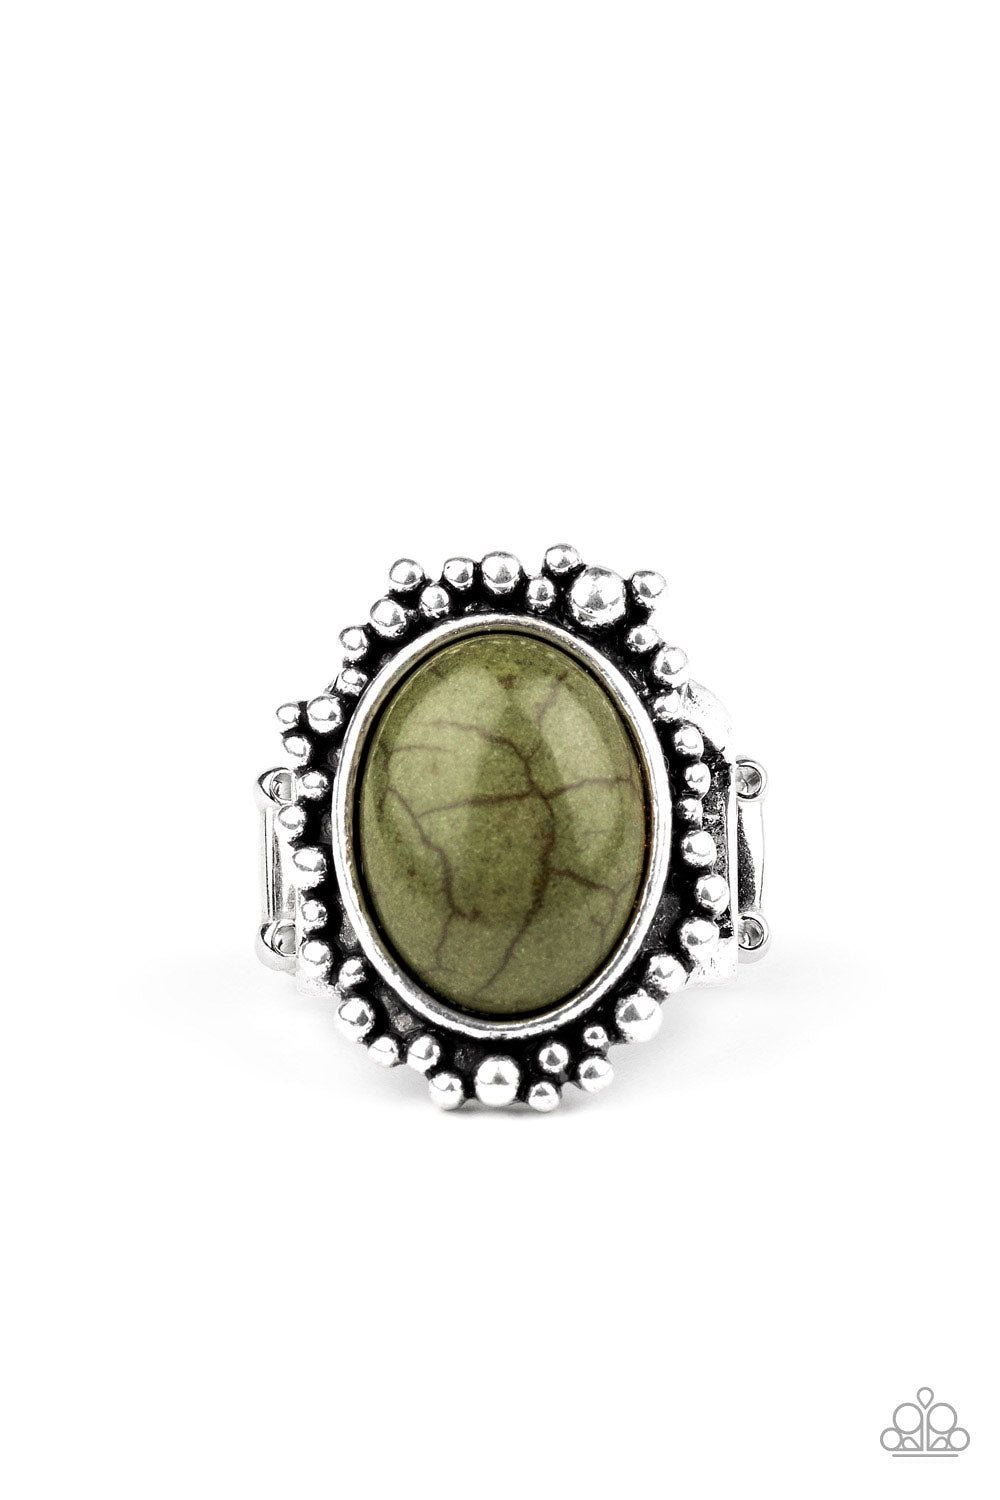 Desert Mine Green Stone Ring - Paparazzi Accessories - lightbox -CarasShop.com - $5 Jewelry by Cara Jewels